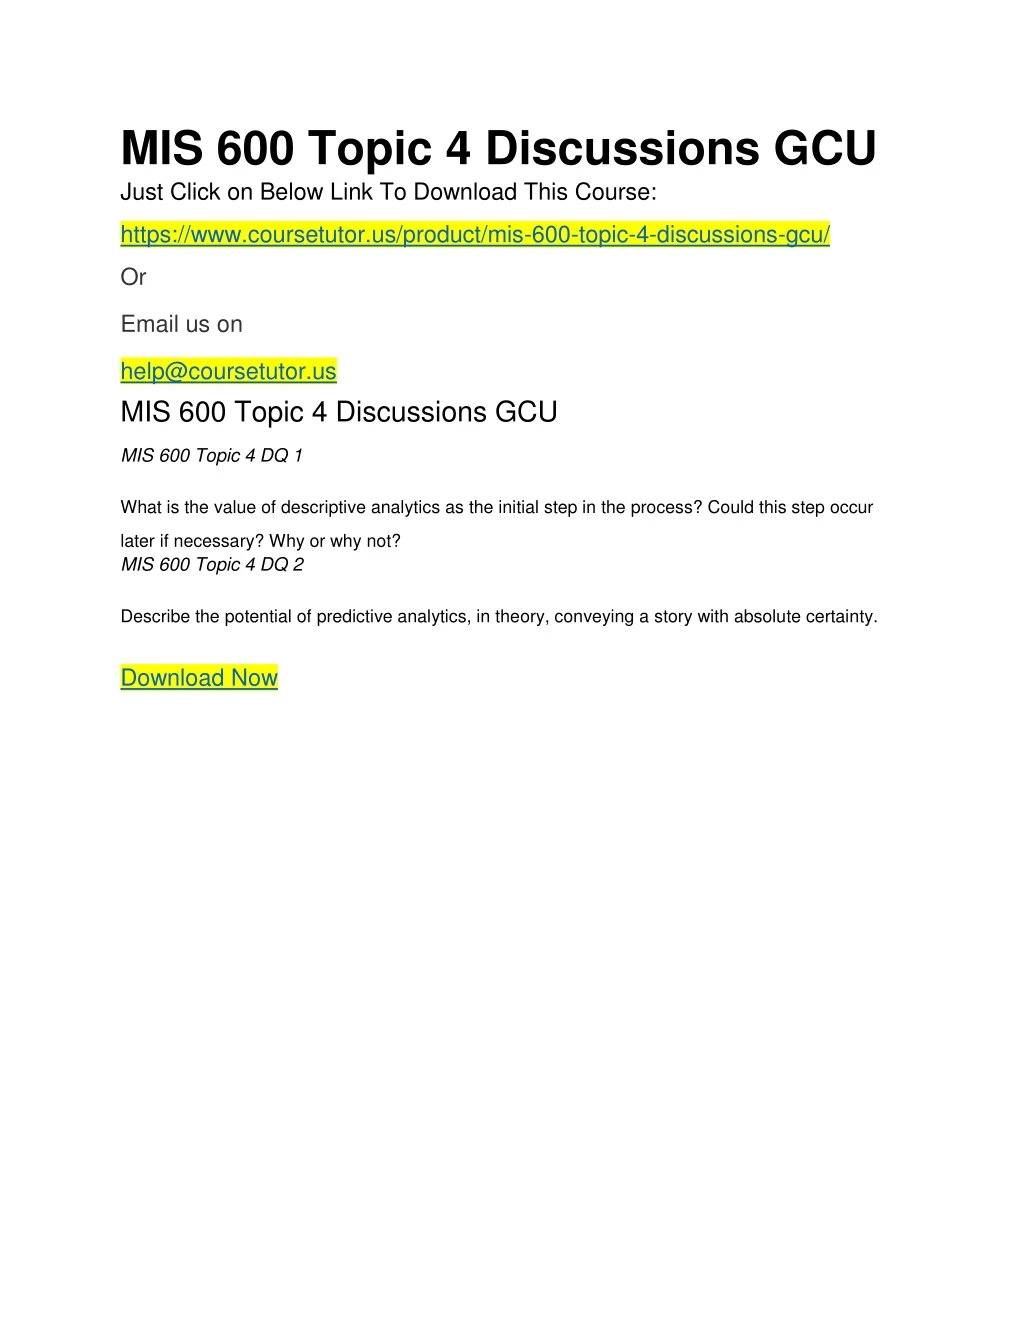 mis 600 topic 4 discussions gcu just click